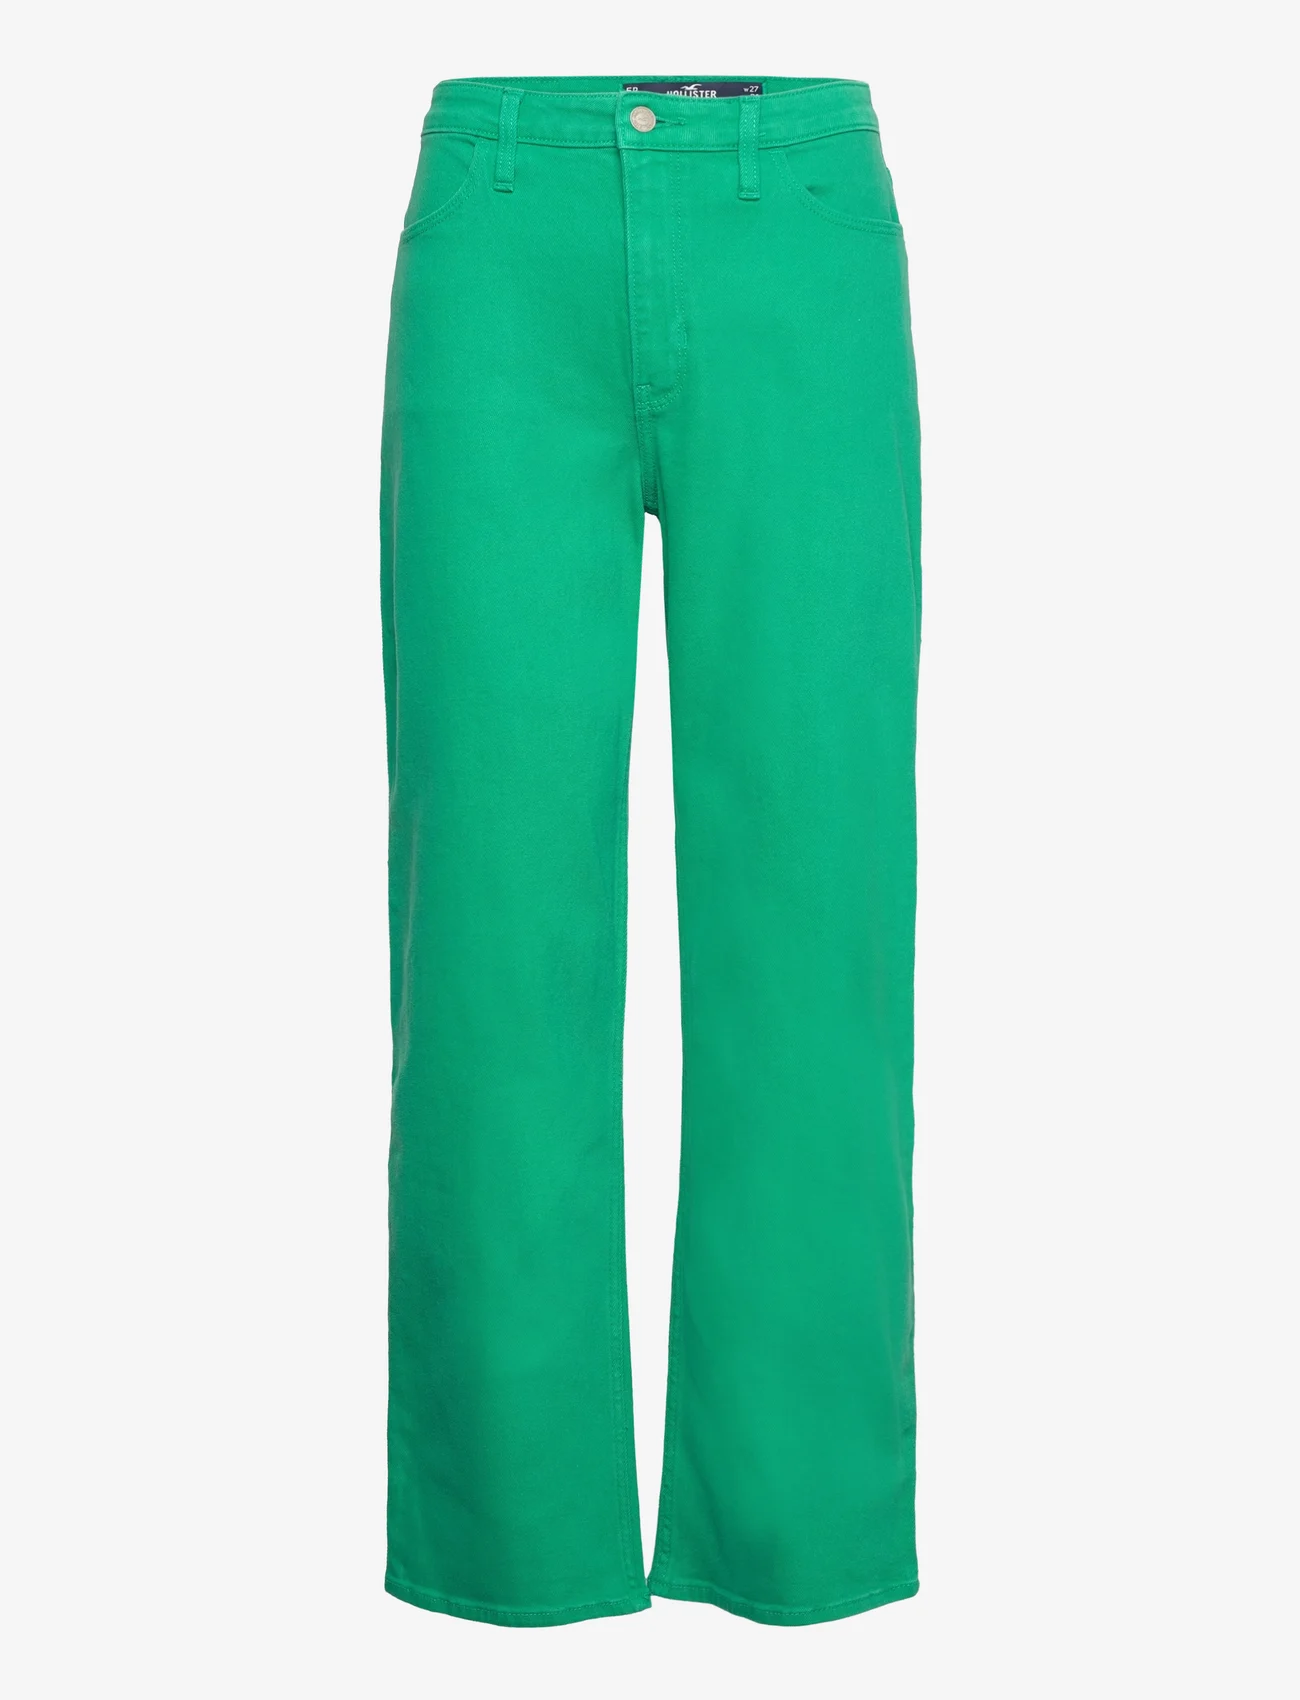 Hollister - HCo. GIRLS JEANS - raka jeans - ultra high rise green dad jean - 0